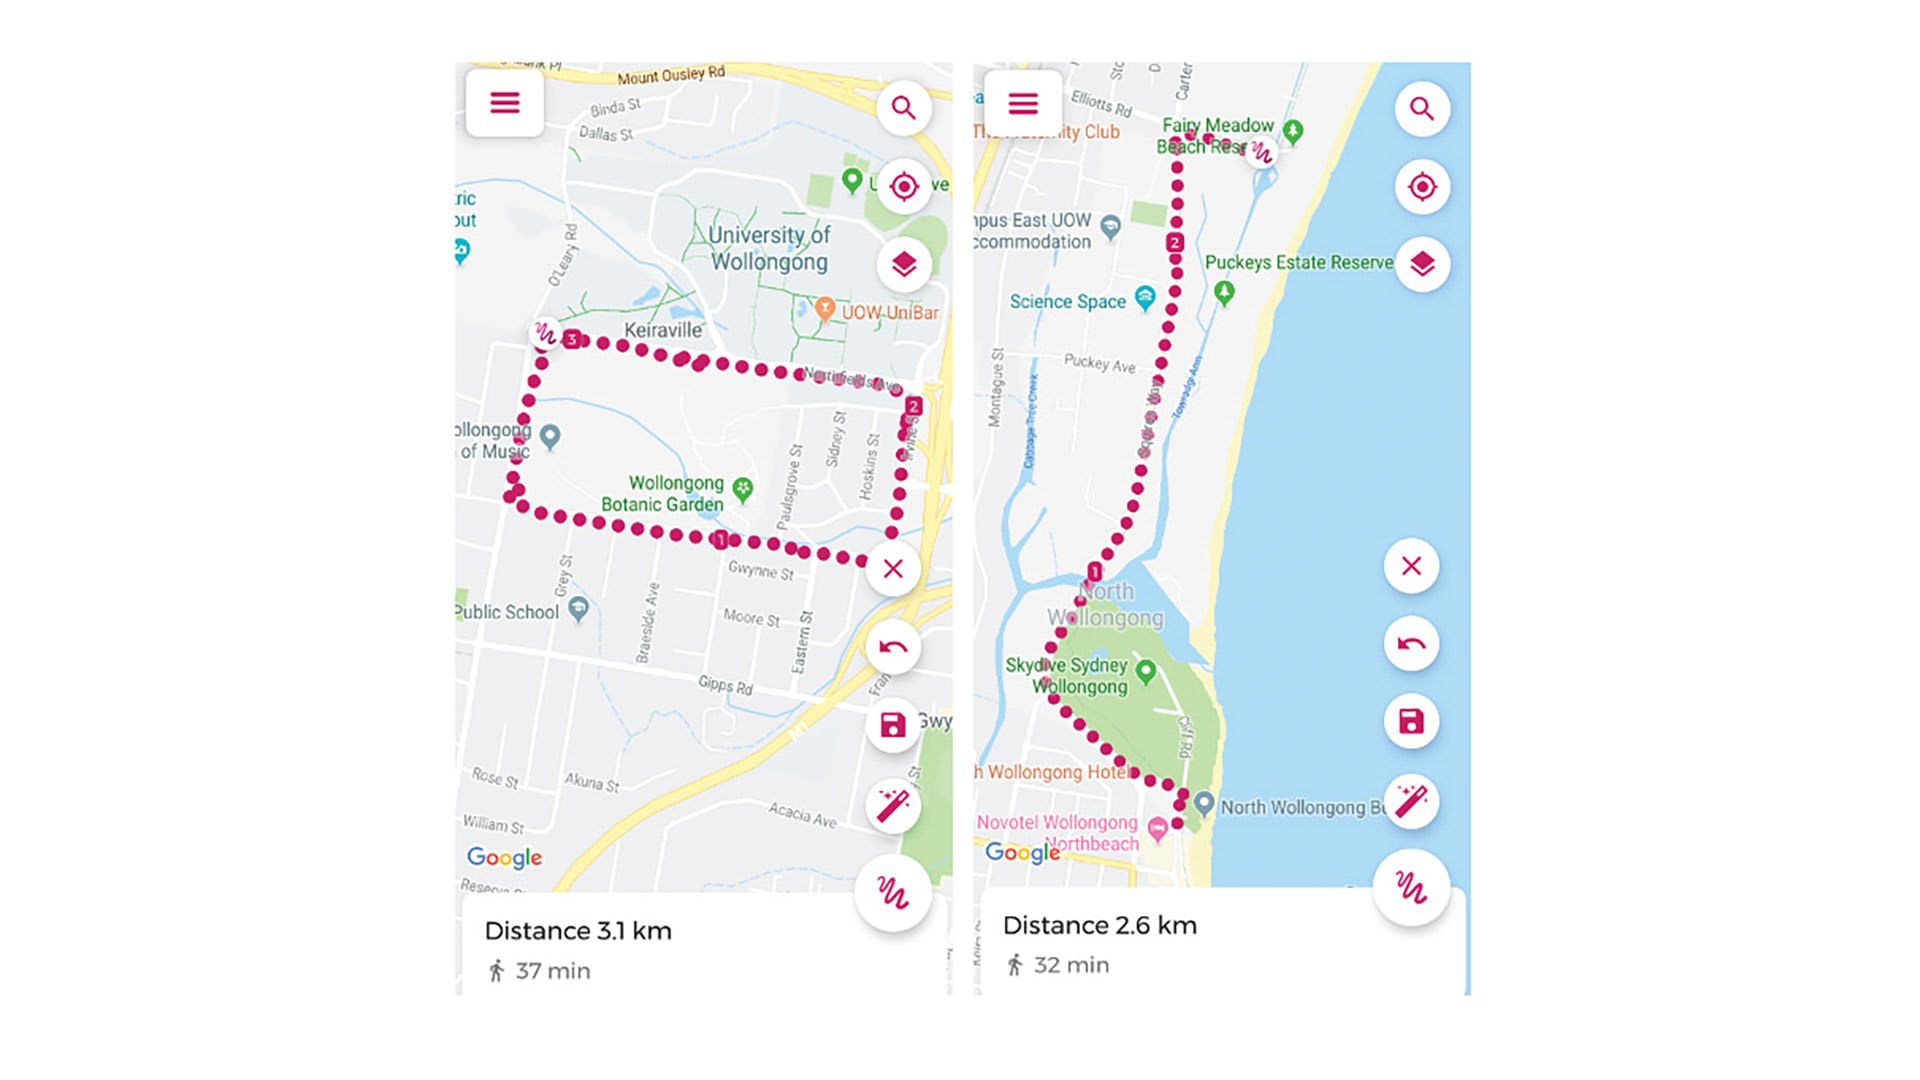 Google maps example of Wollongong running tracks